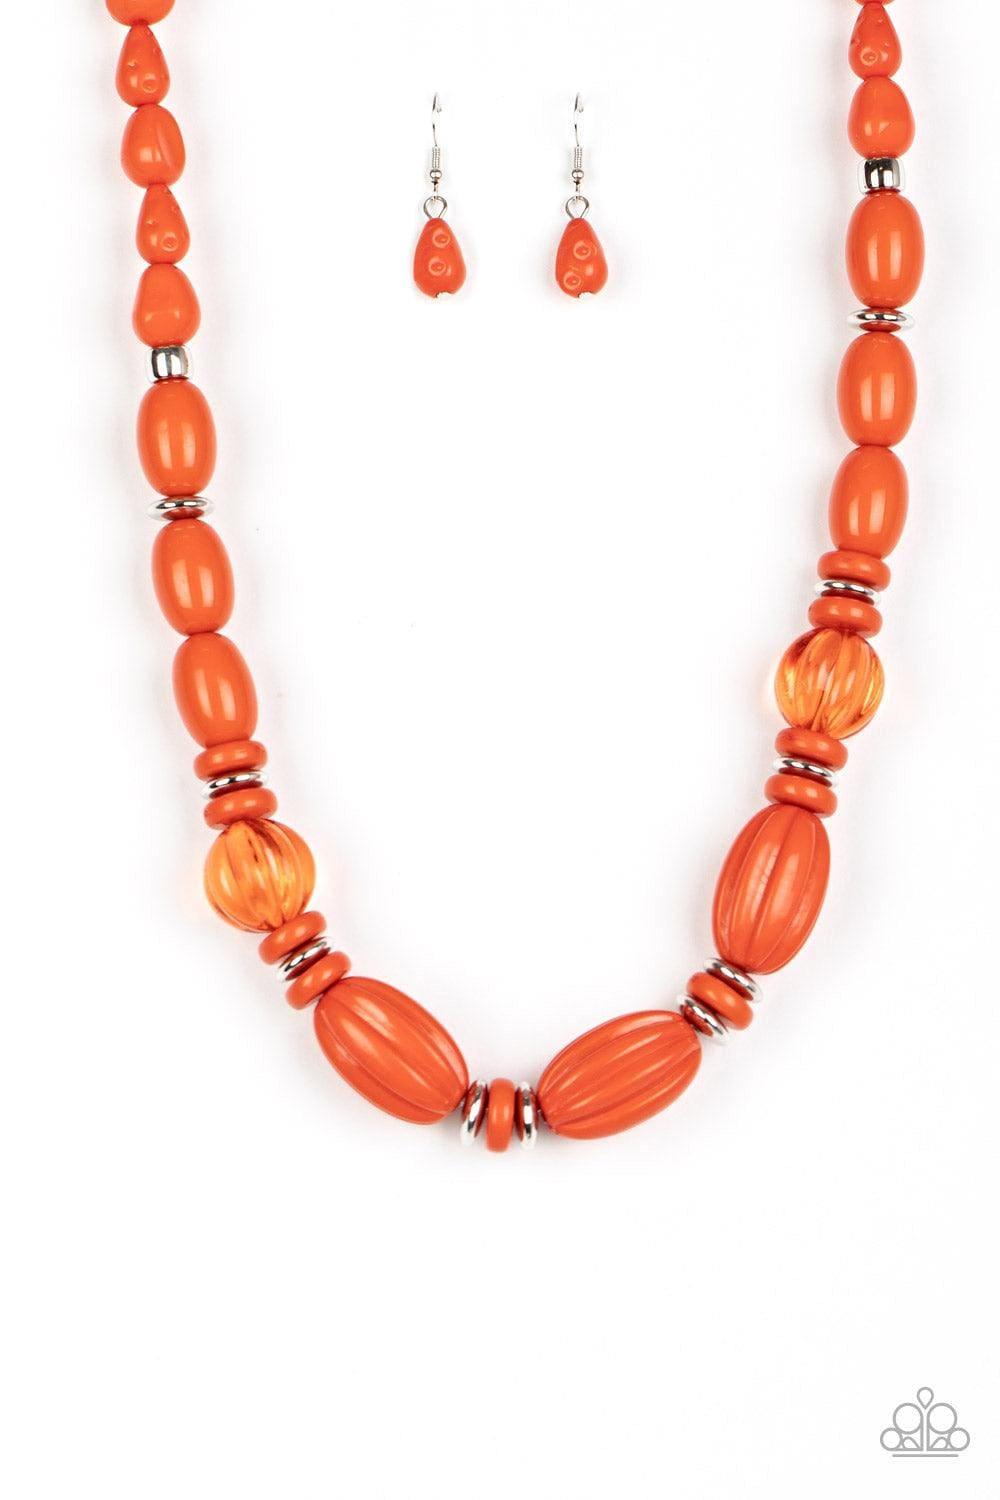 Paparazzi Accessories - High Alert - Orange Necklace - Bling by JessieK